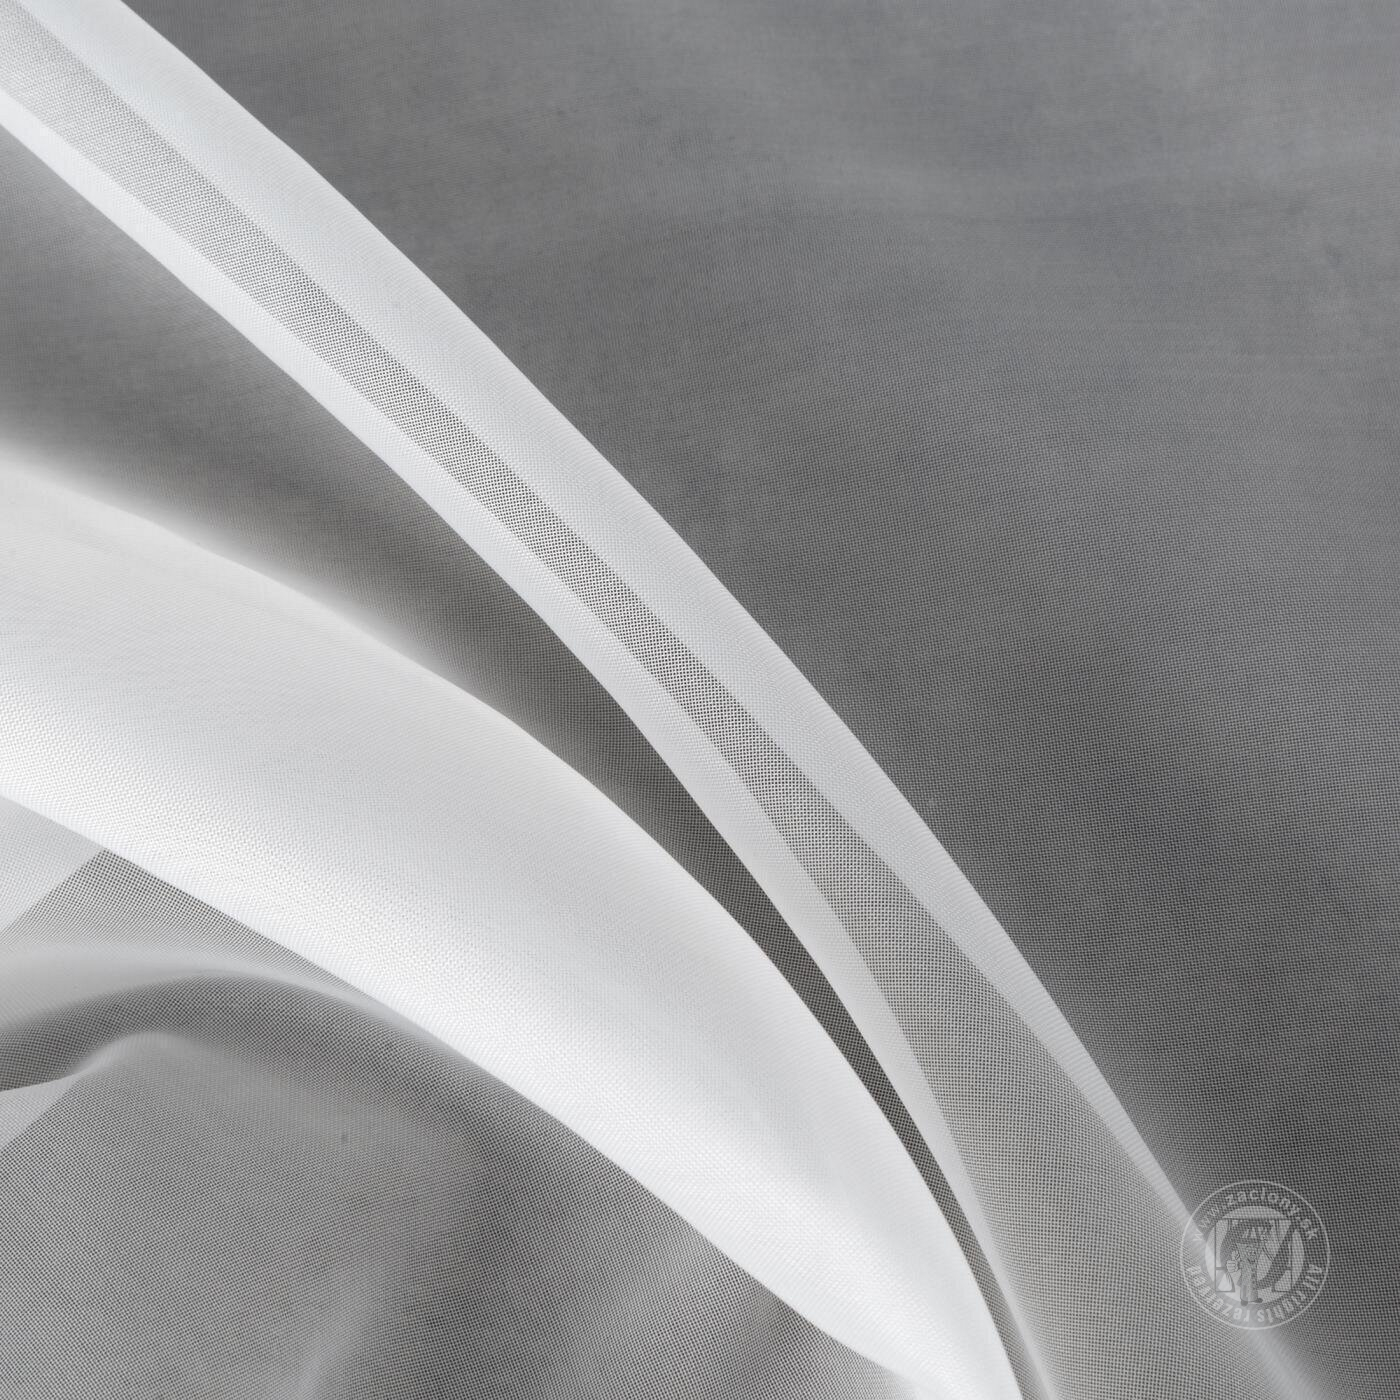 Záclona LUCY na krúžky biela 140x250cm